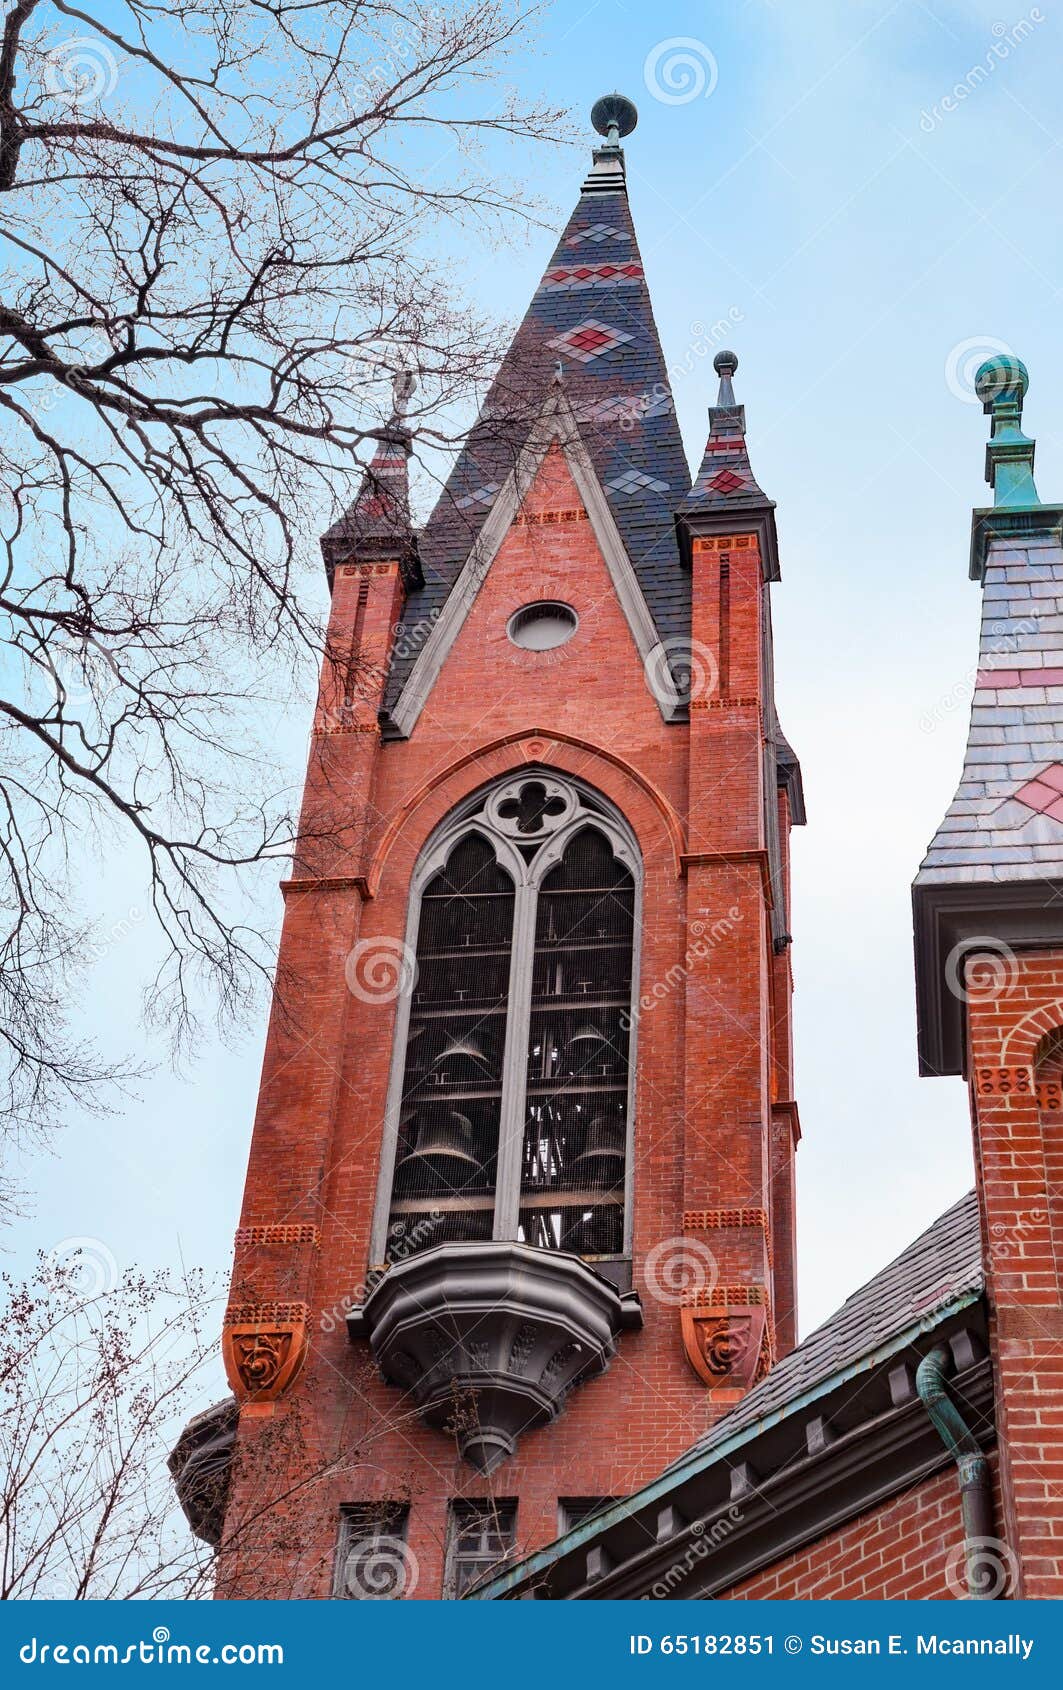 church belfry